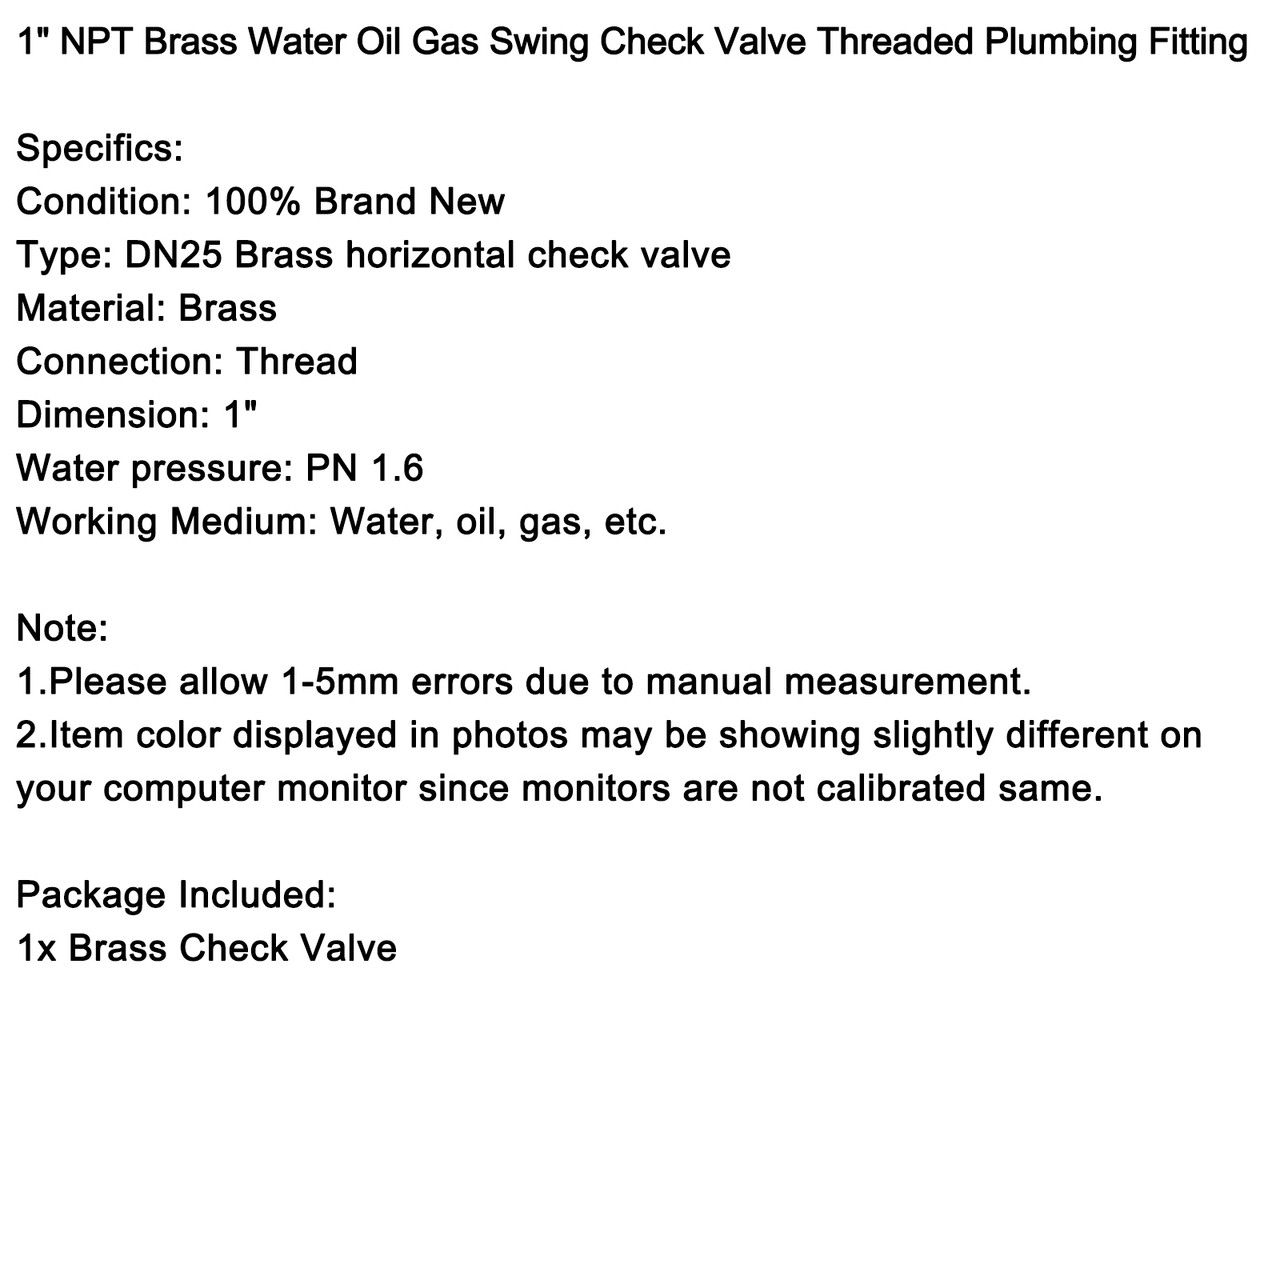 1" NPT Brass Water Oil Gas Swing Check Valve Threaded Plumbing Fitting